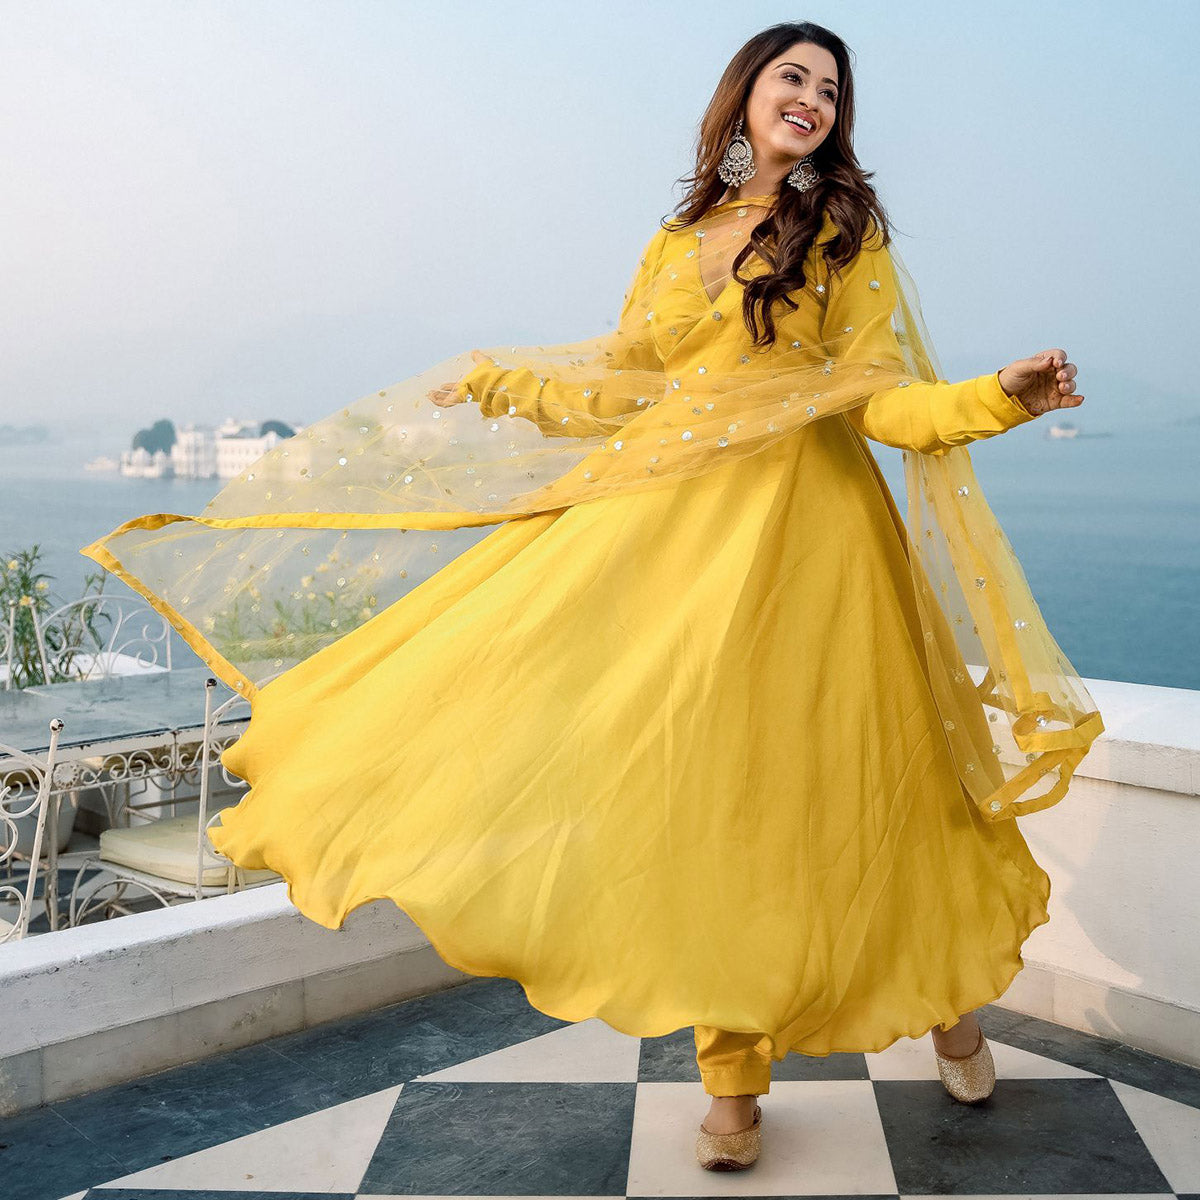 763 Likes, 11 Comments - Hanna S Khan (@hannaskhan) on Instagram: “A  beaming yellow lehenga for your mehendi… | Ceremony dresses, Haldi ceremony  outfit, Haldi dress